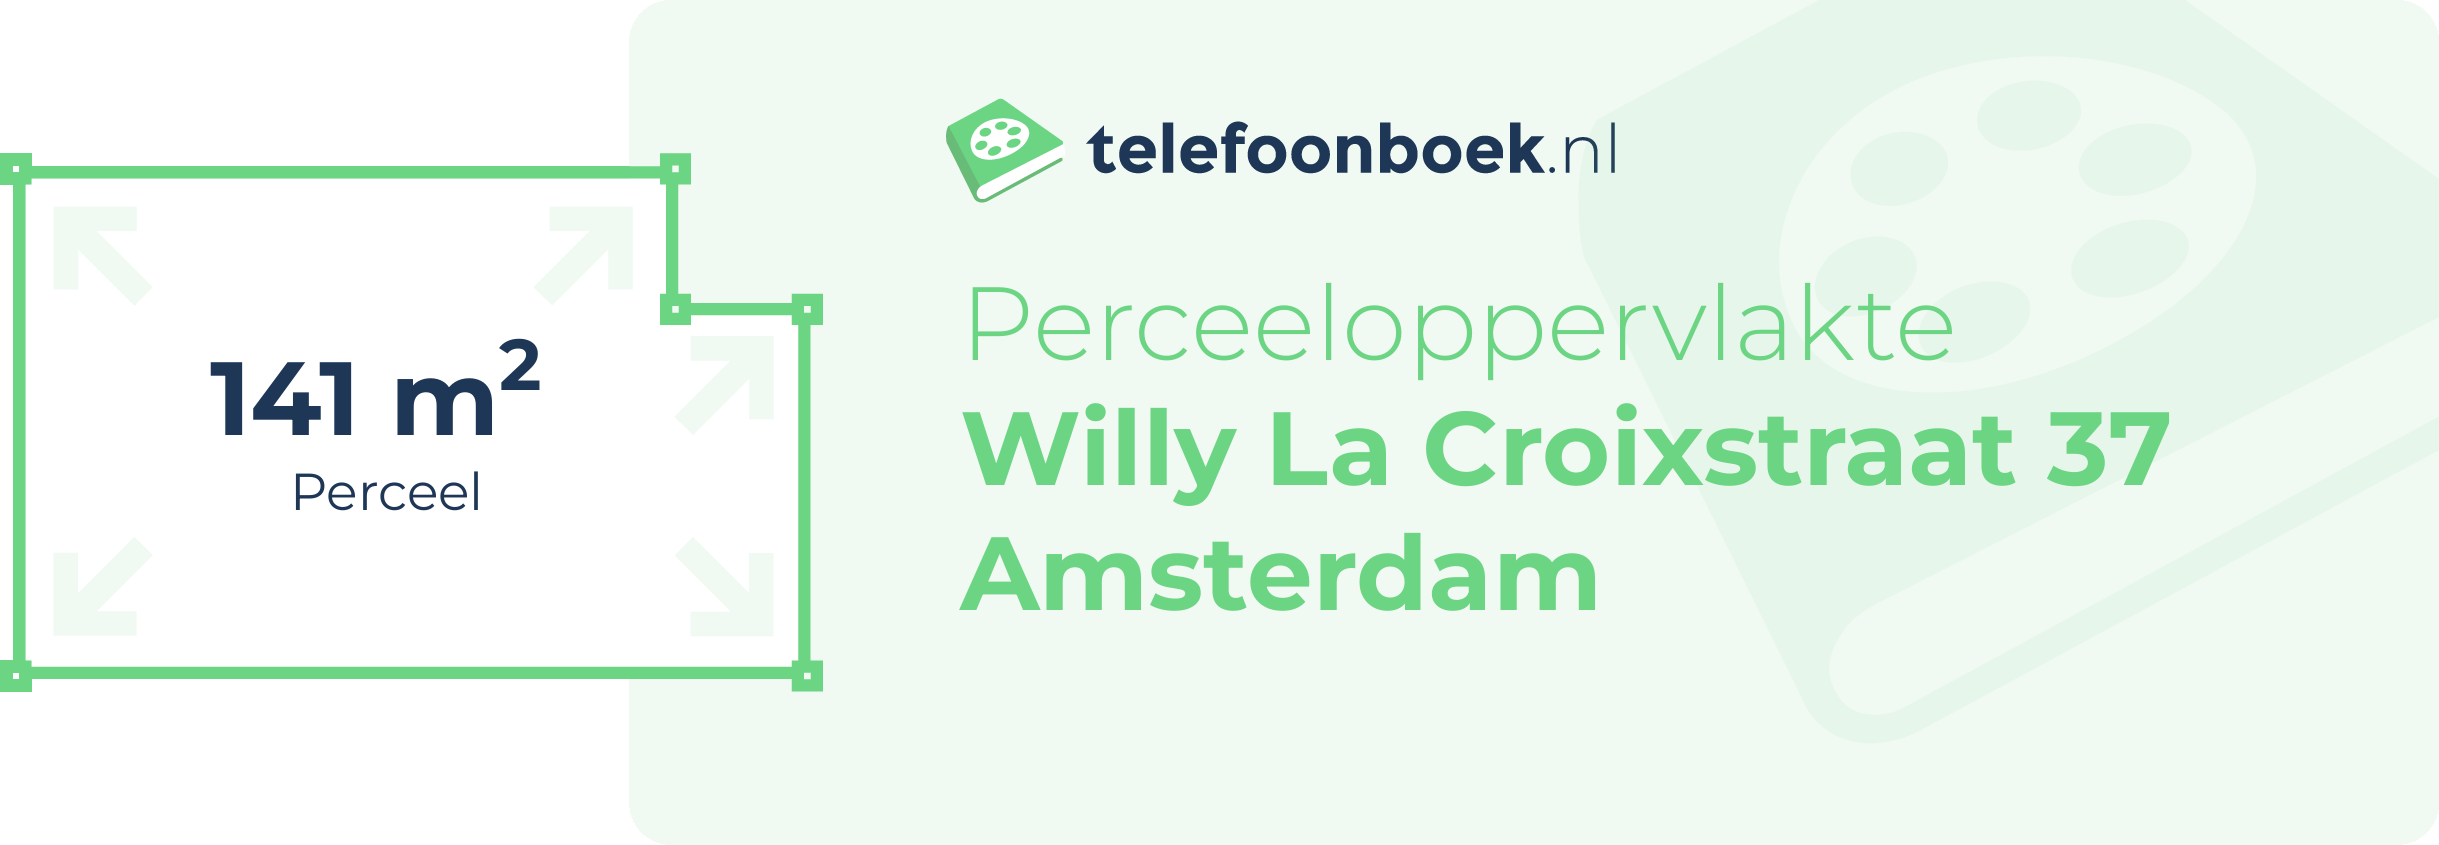 Perceeloppervlakte Willy La Croixstraat 37 Amsterdam